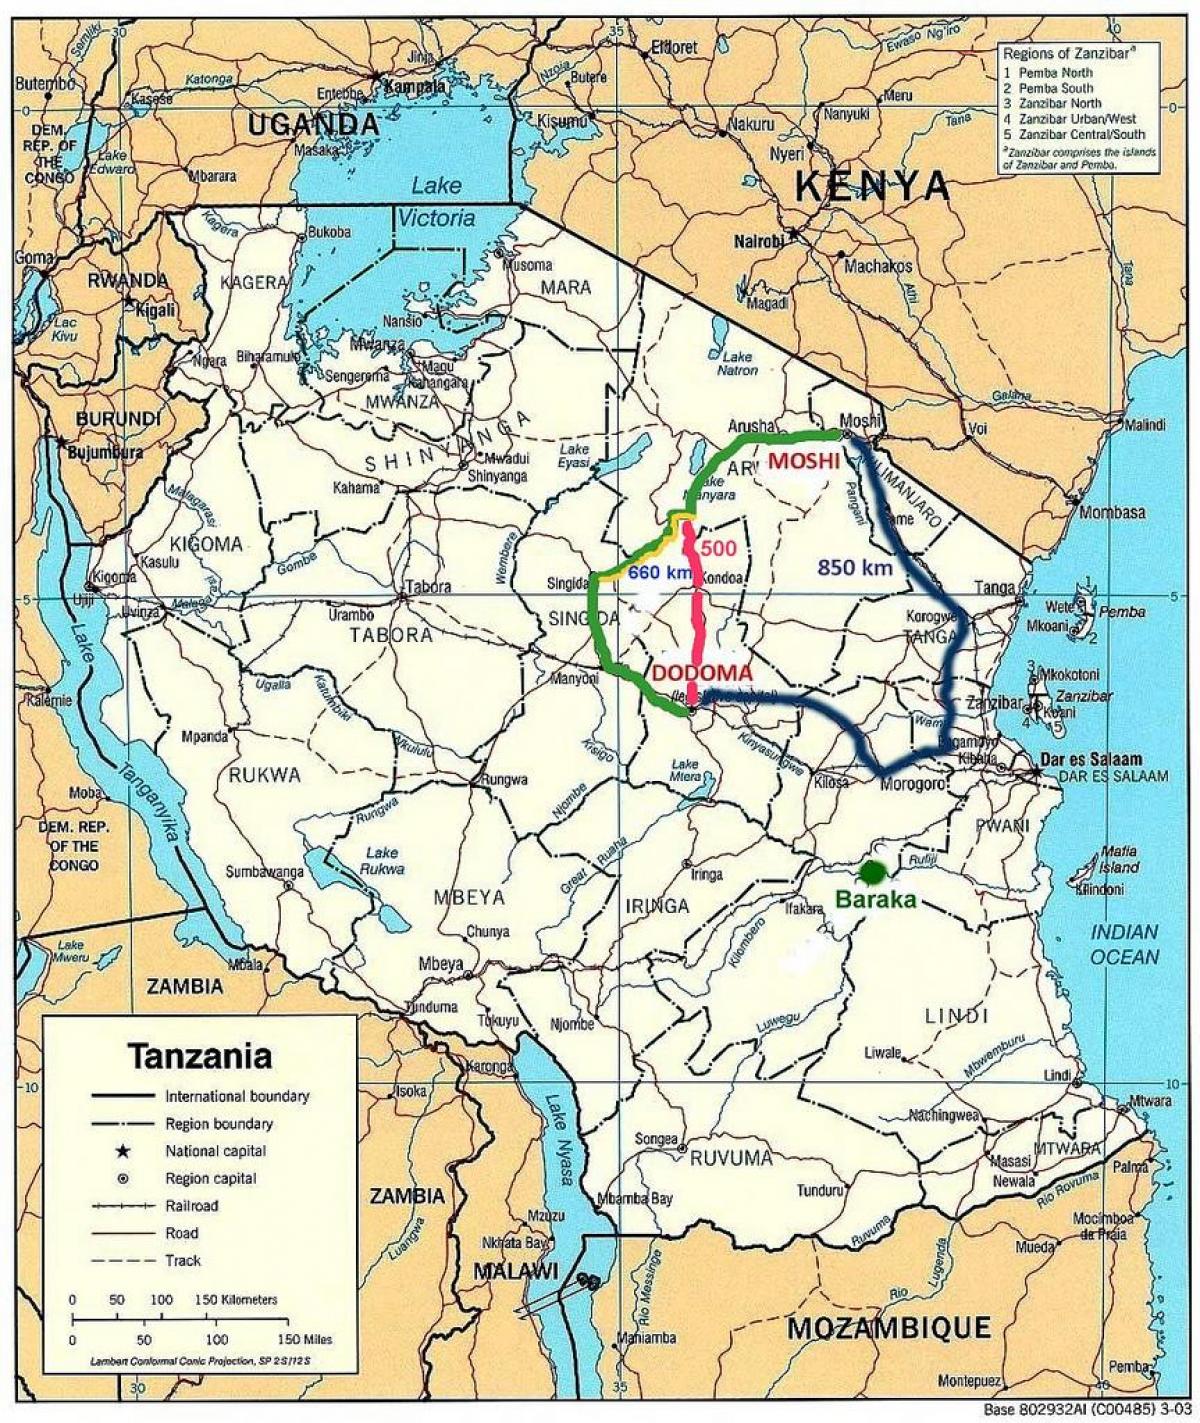 Tansania road network map